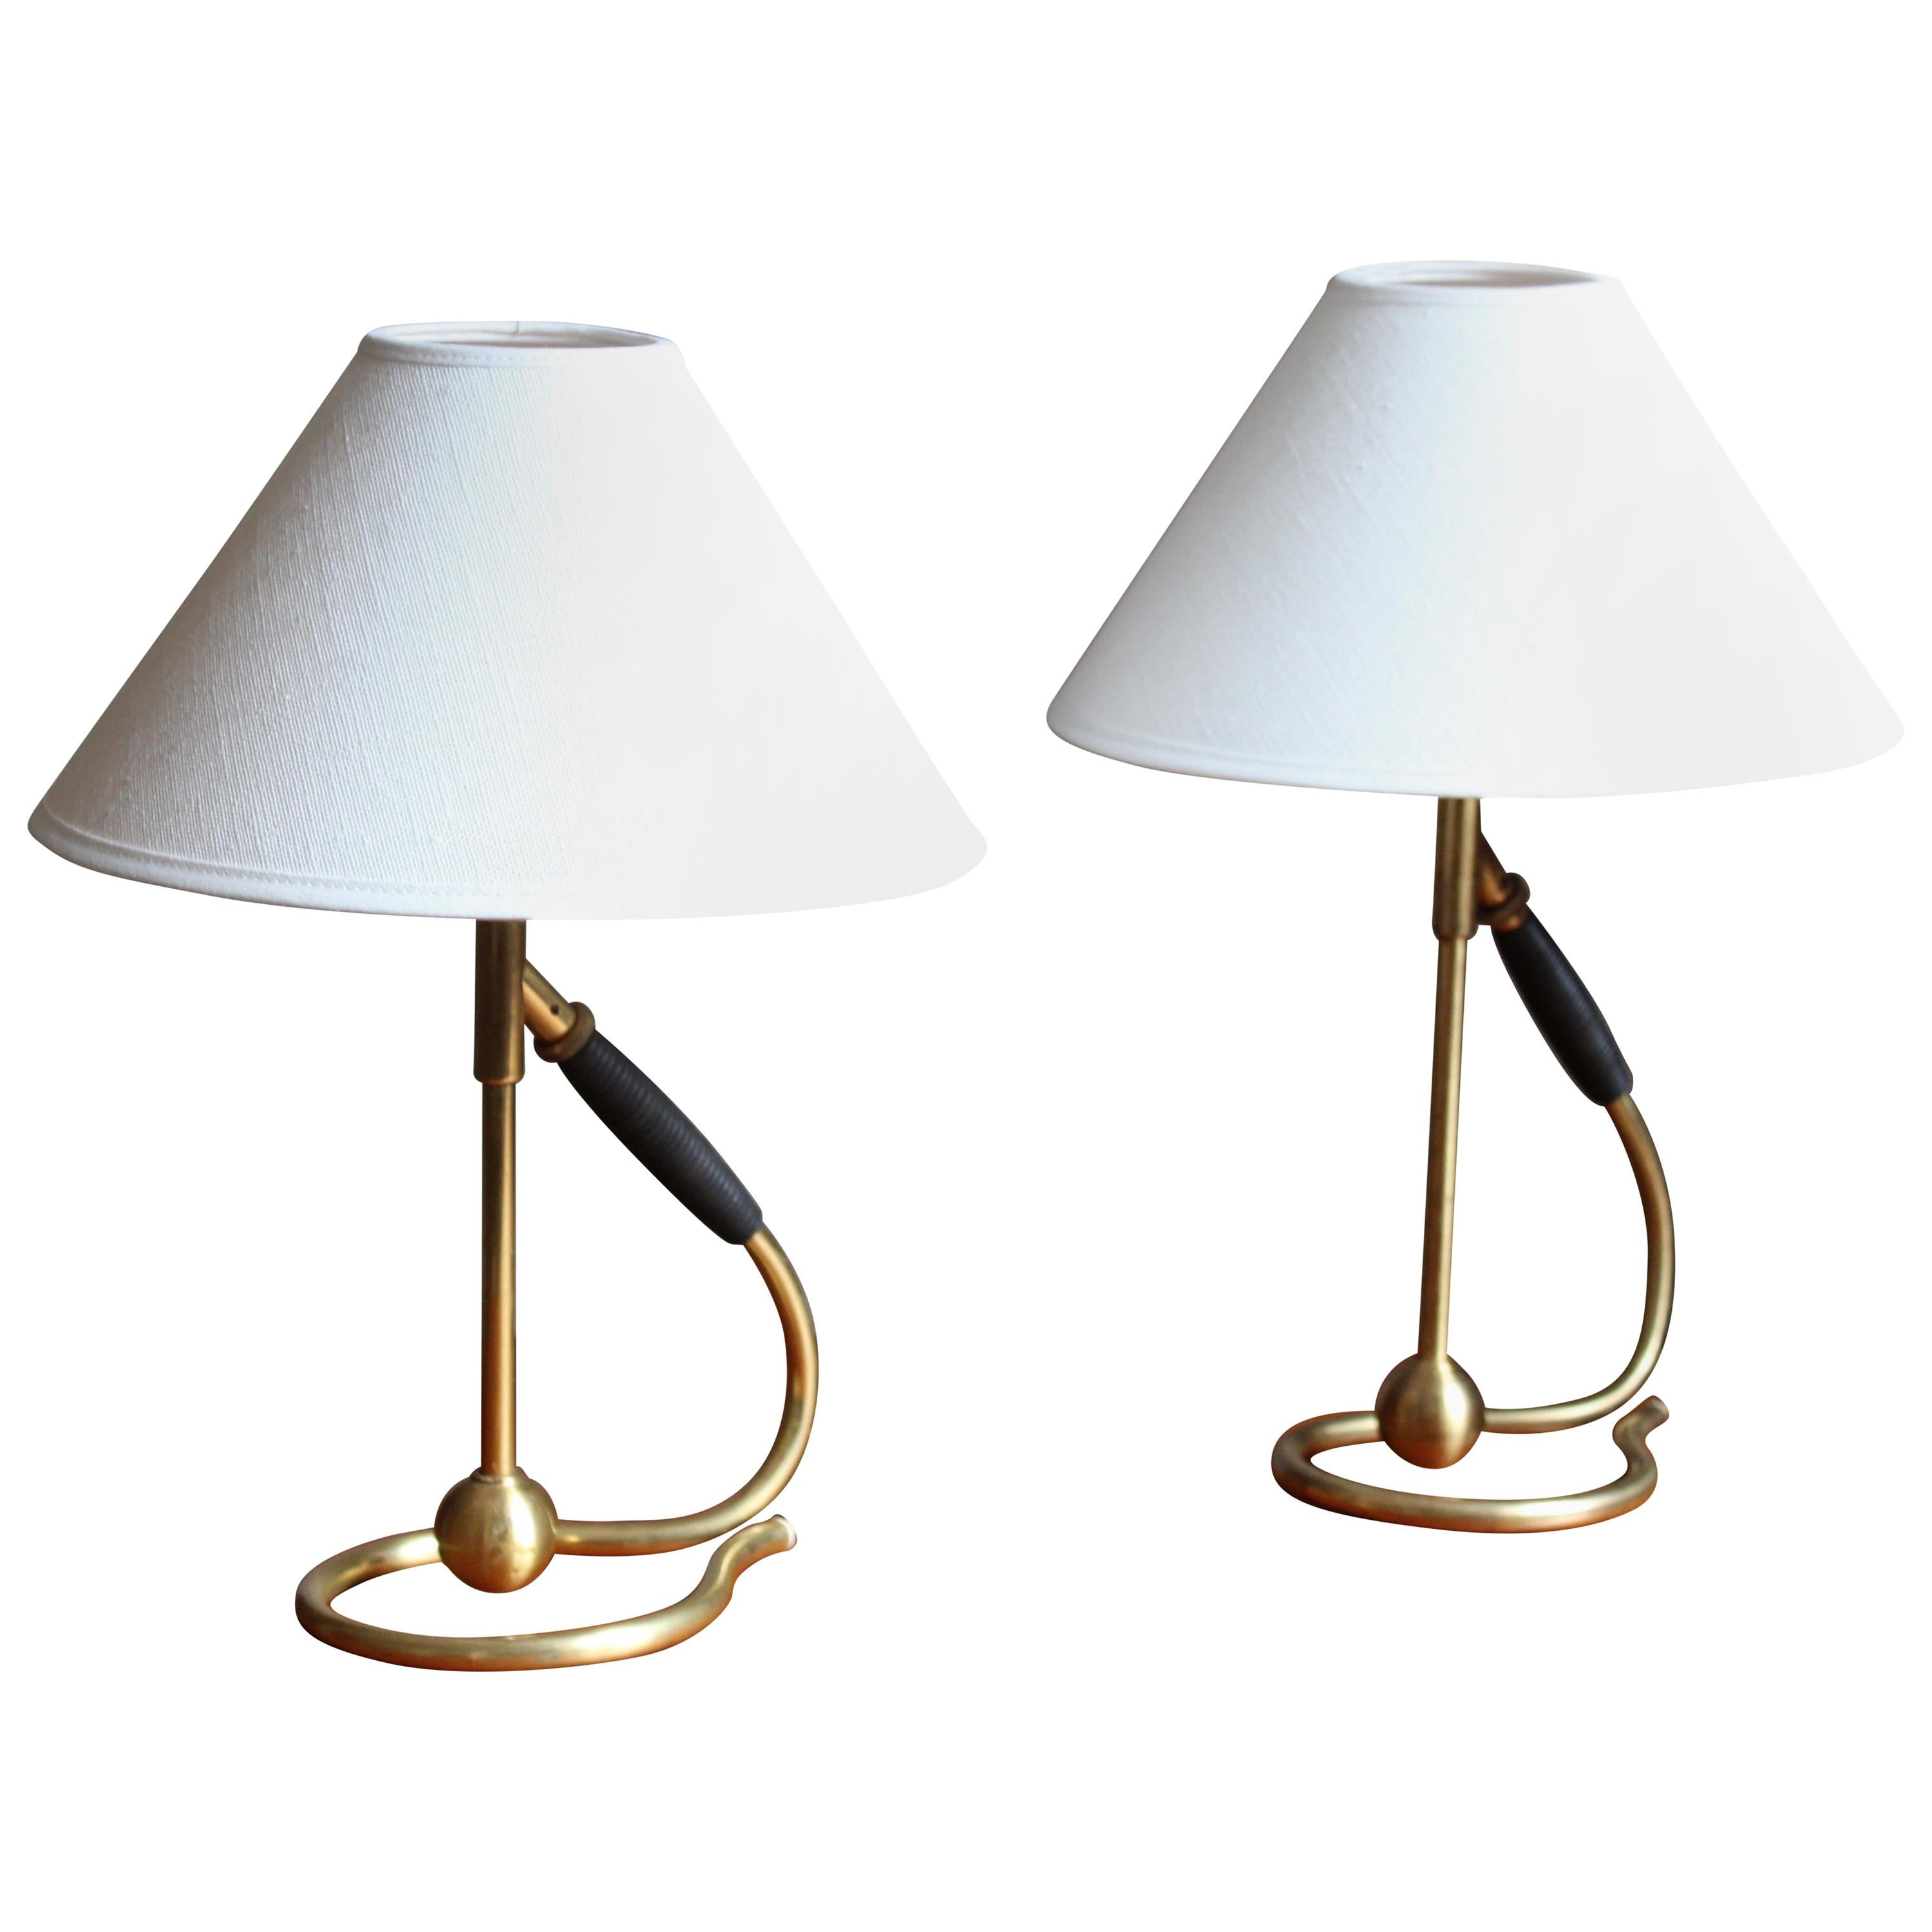 Kaare Klint, Adjustable Modernist Table Lamps, Brass, Rubber, Denmark, 1950s